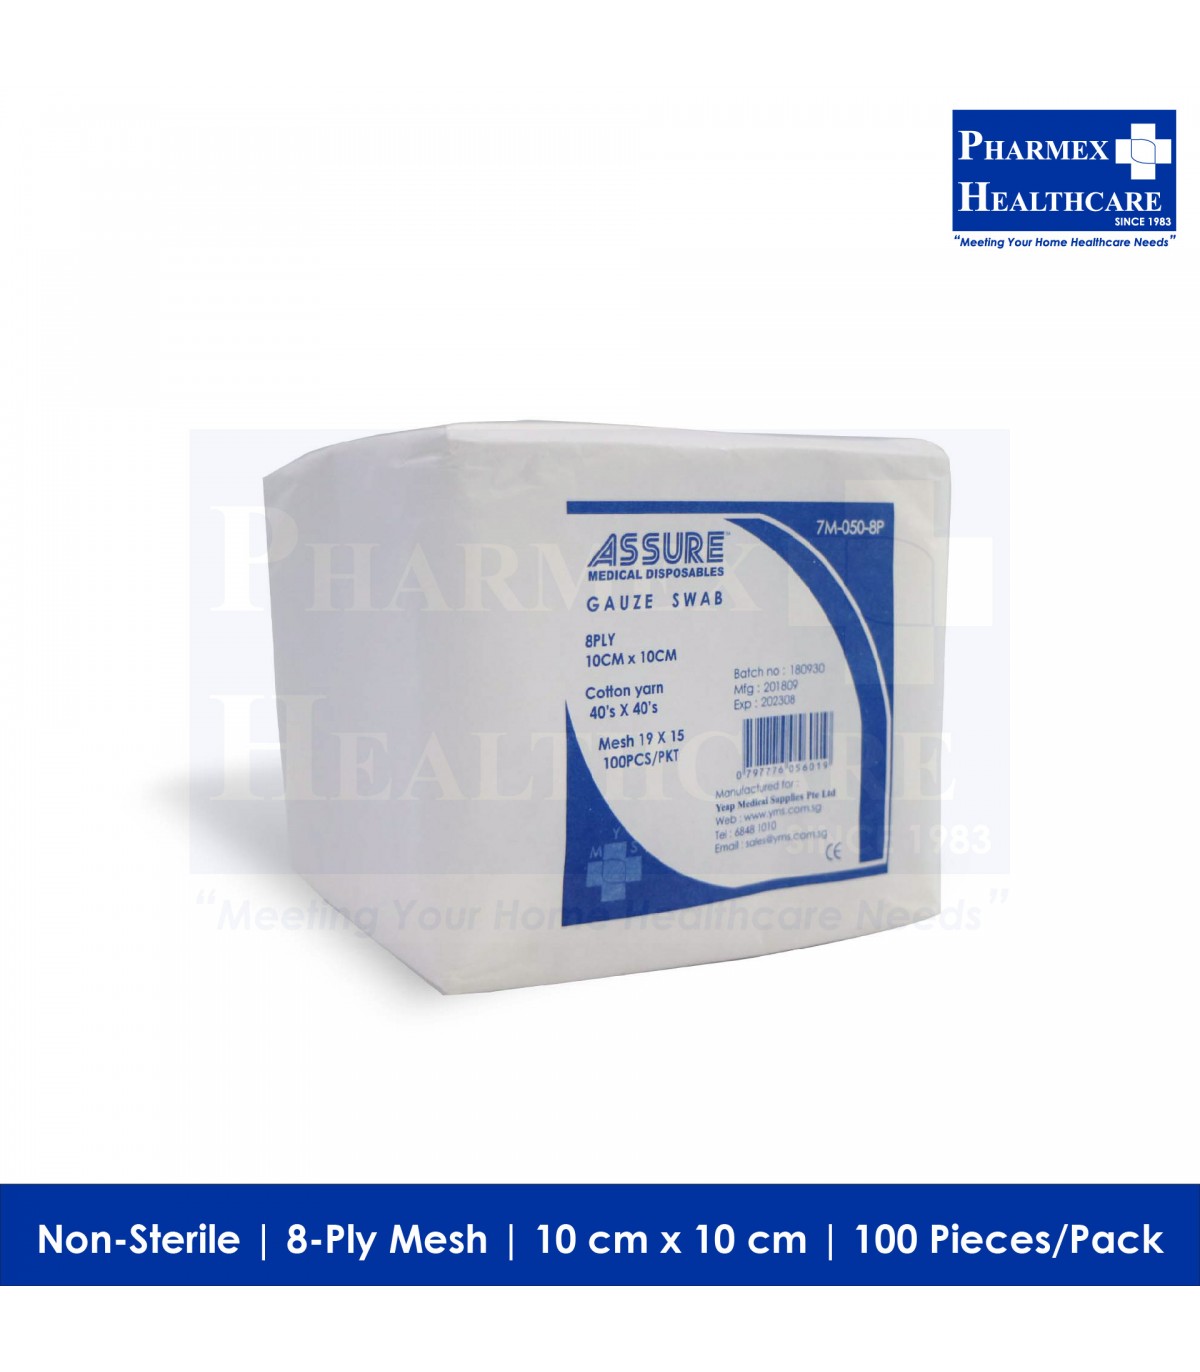 ASSURE Non-Sterile Gauze 10cm x 10cm (3 Ply Types) | Pharmex Healthcare